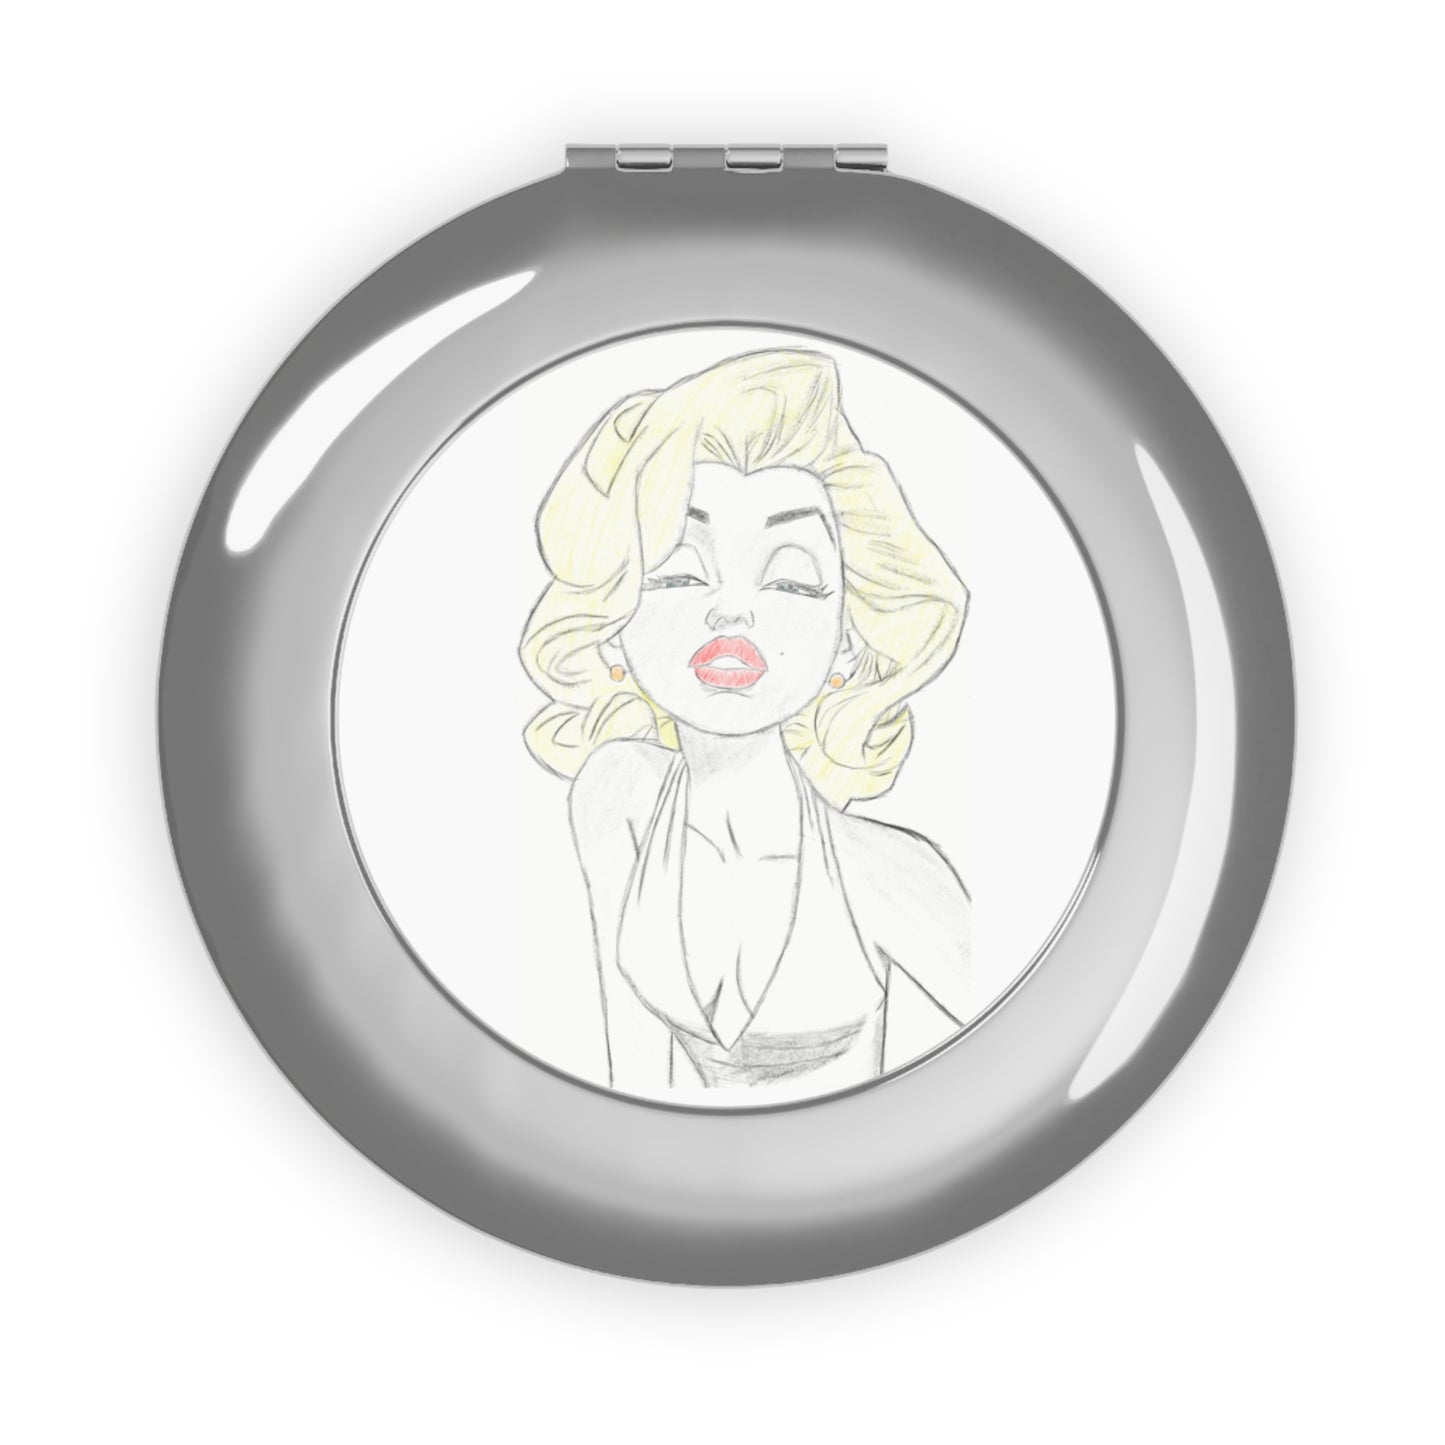 Marilyn Monroe Compact Mirror